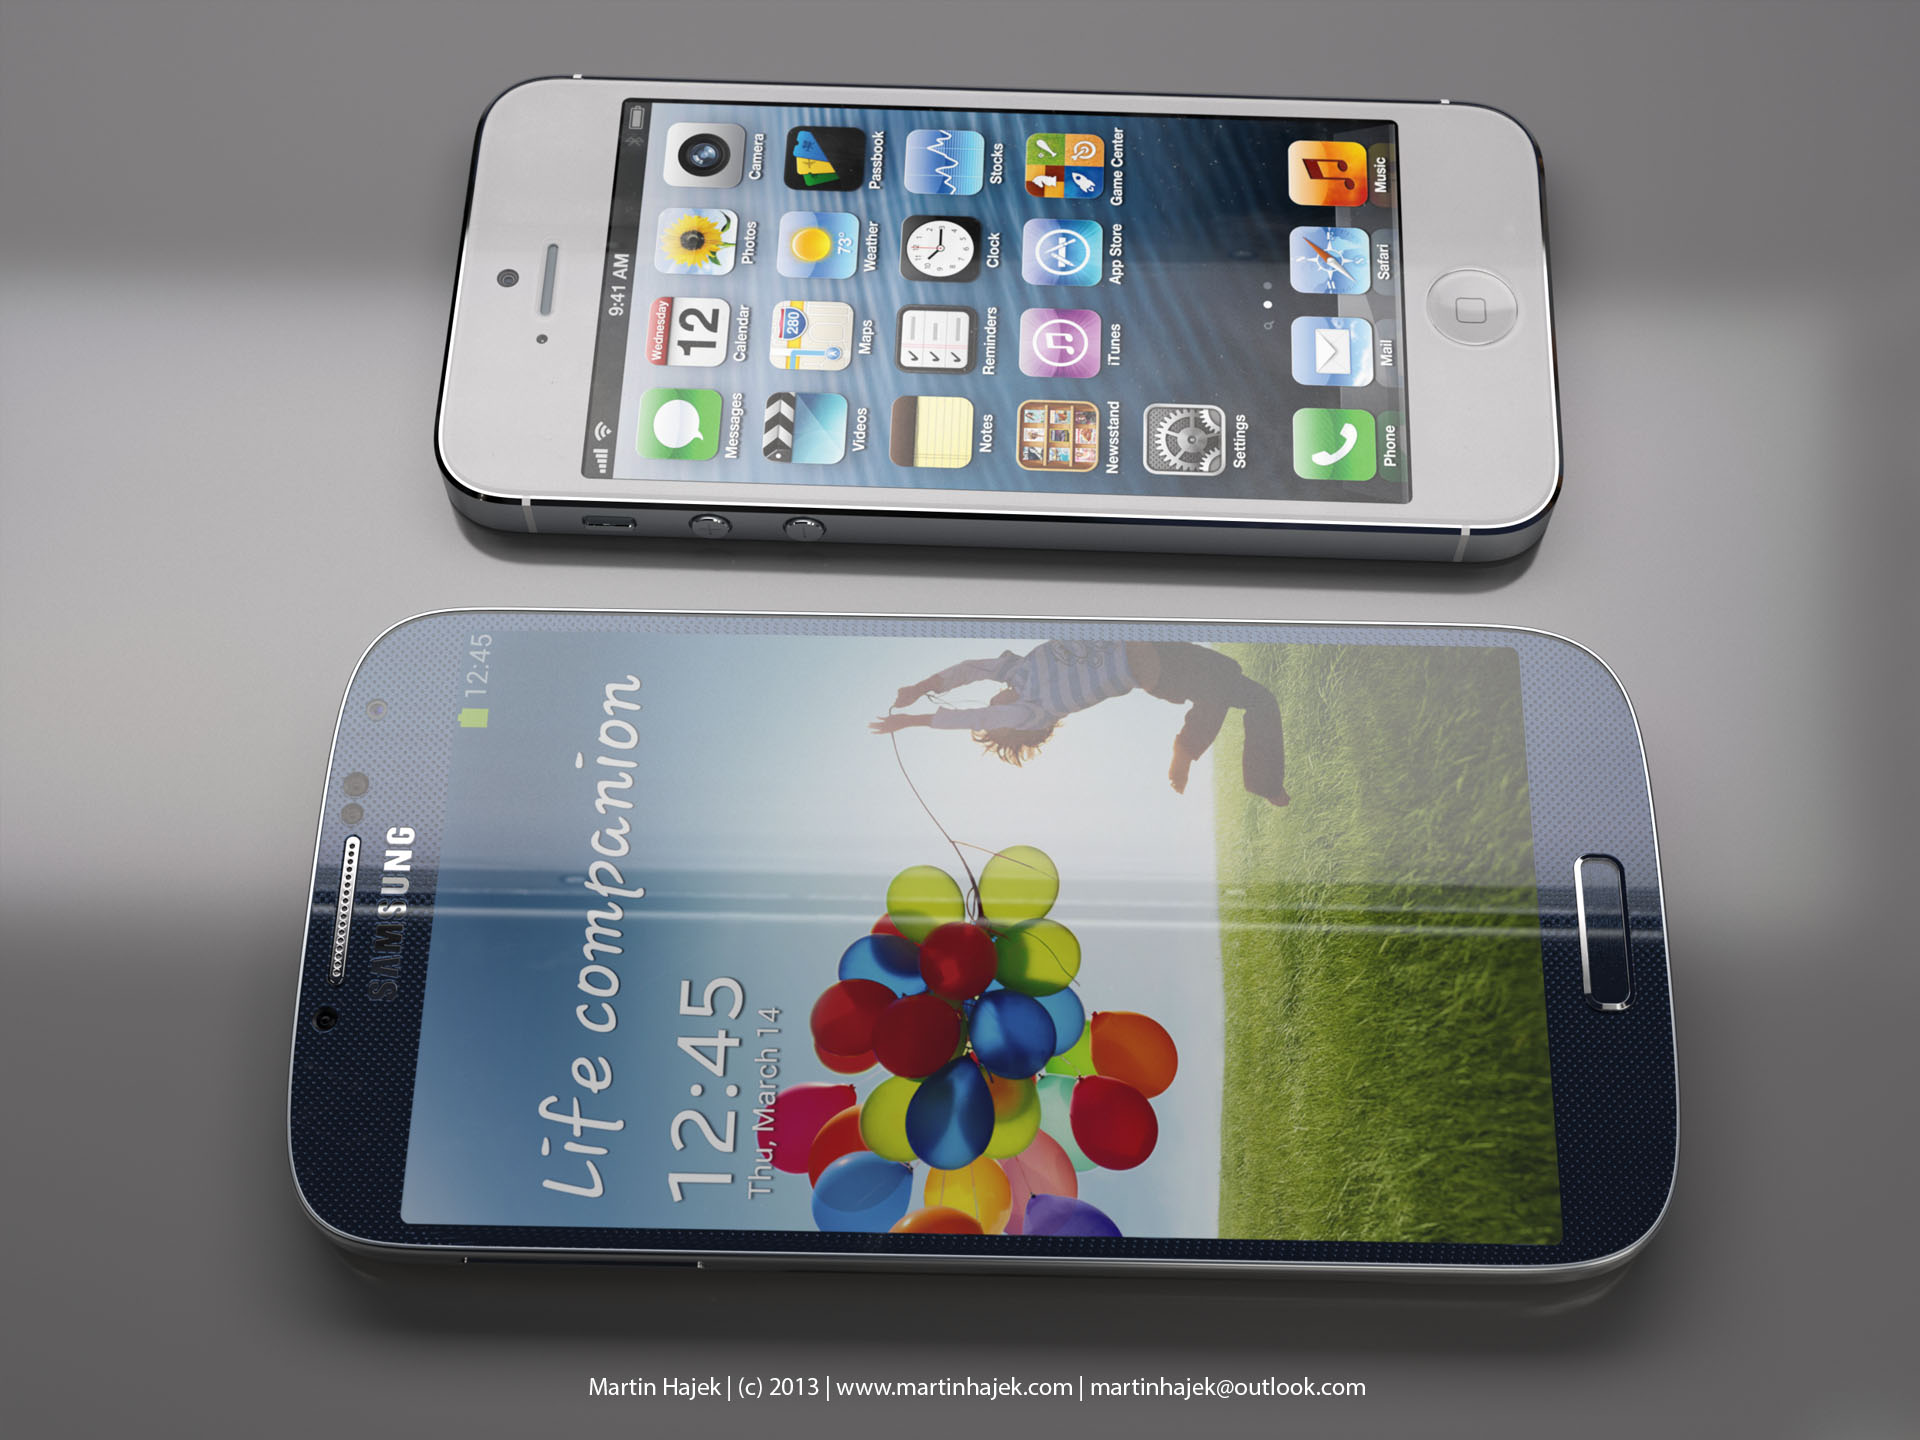 Size comparison (Galaxy S4 vs iPhone 5, Martin Hajek 004)